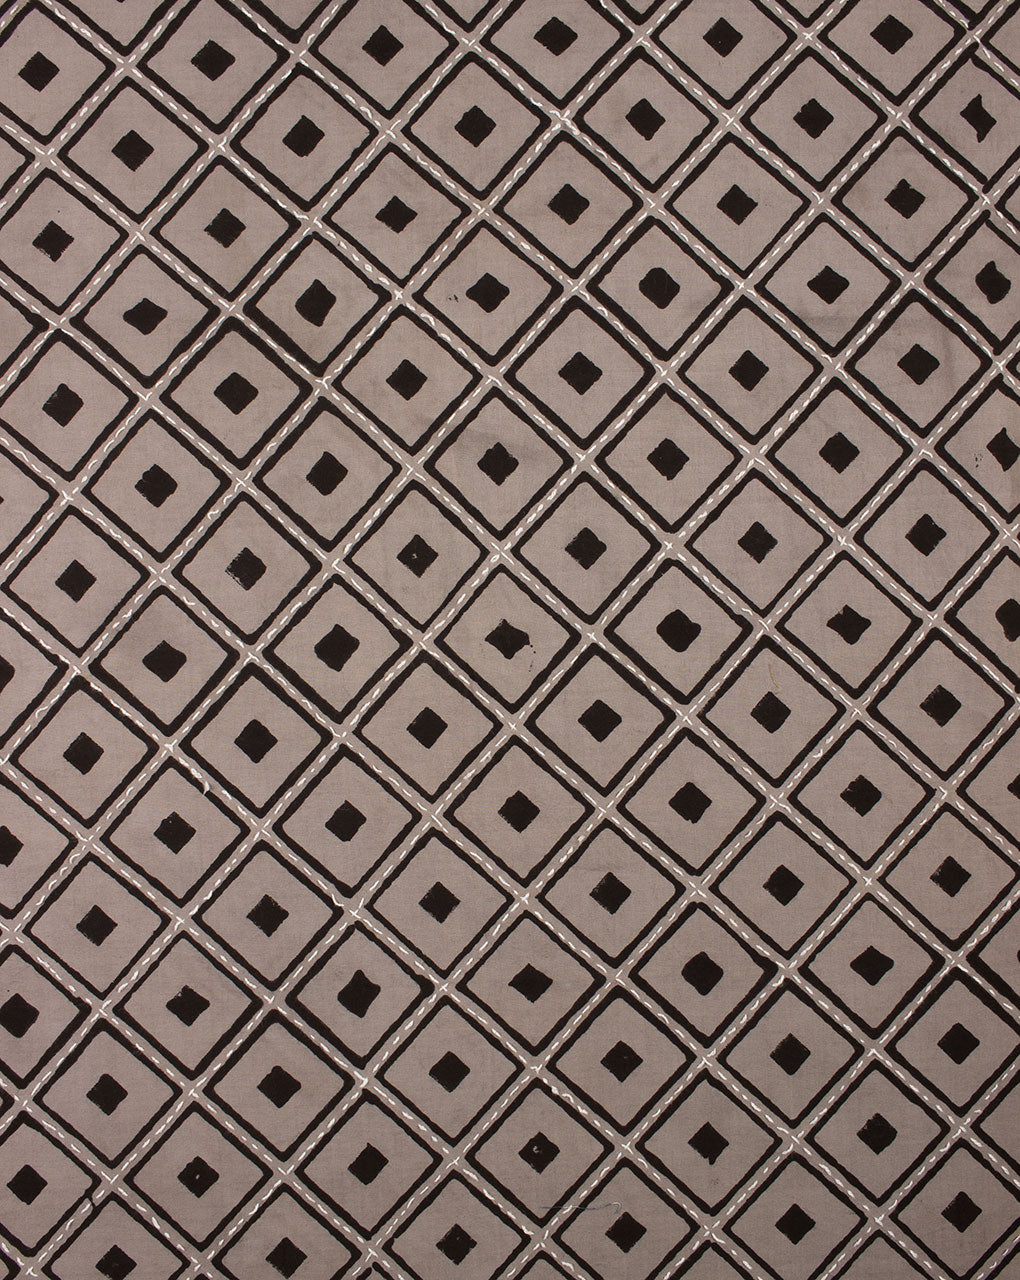 Hand Block Hand Kantha Pure Handloom Cotton Fabric - Fabriclore.com